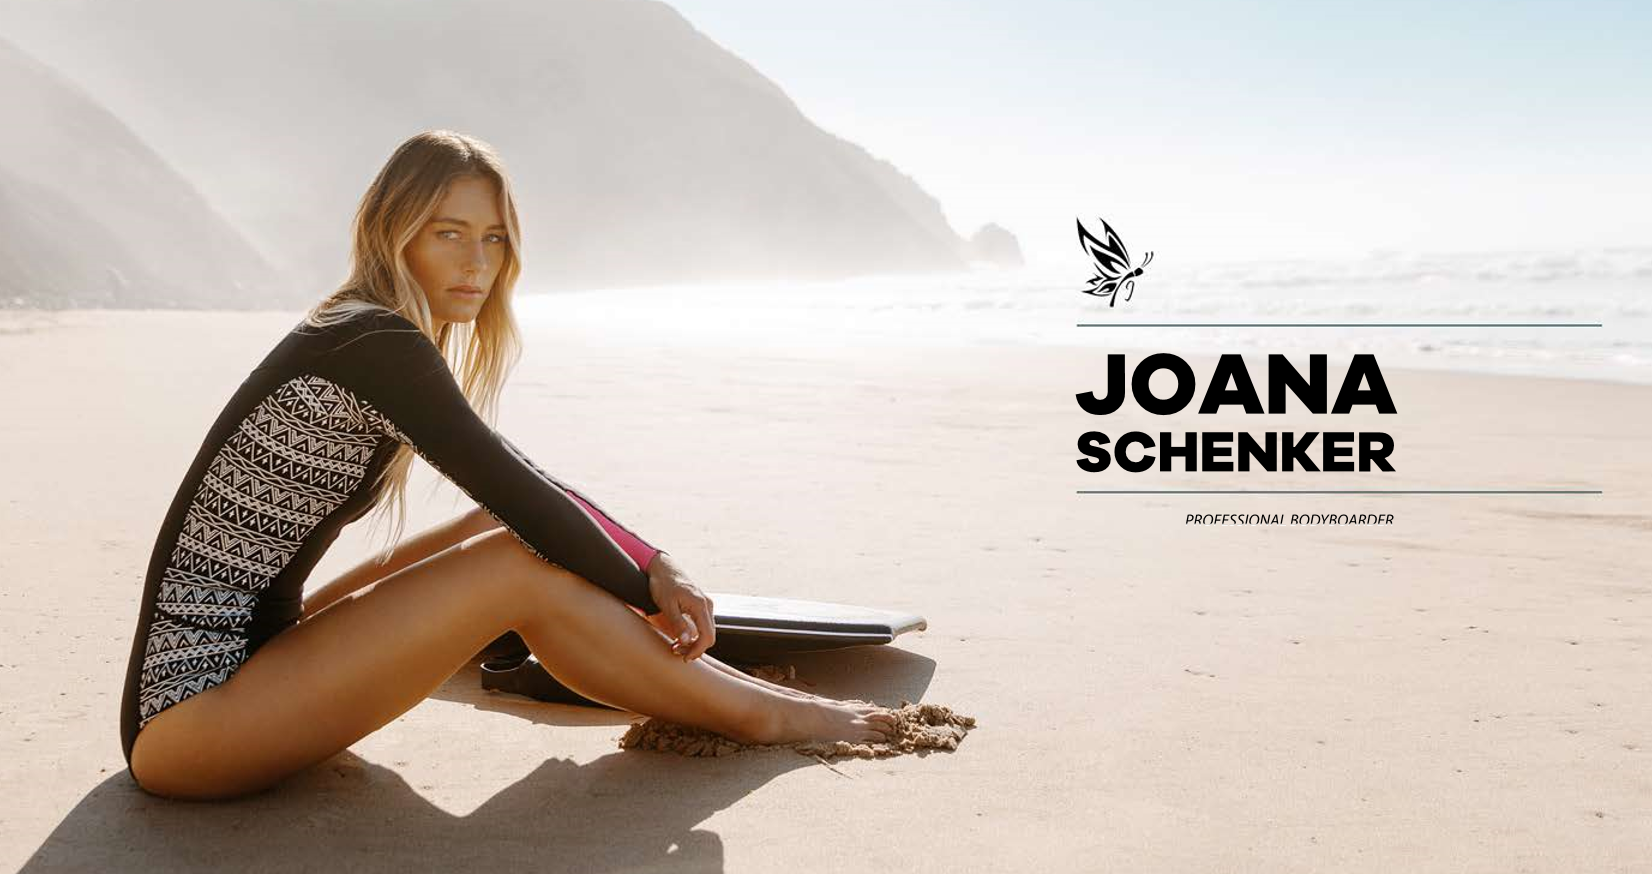 Joana Schenker: renovado o apoio à Campeã de Bodyboard